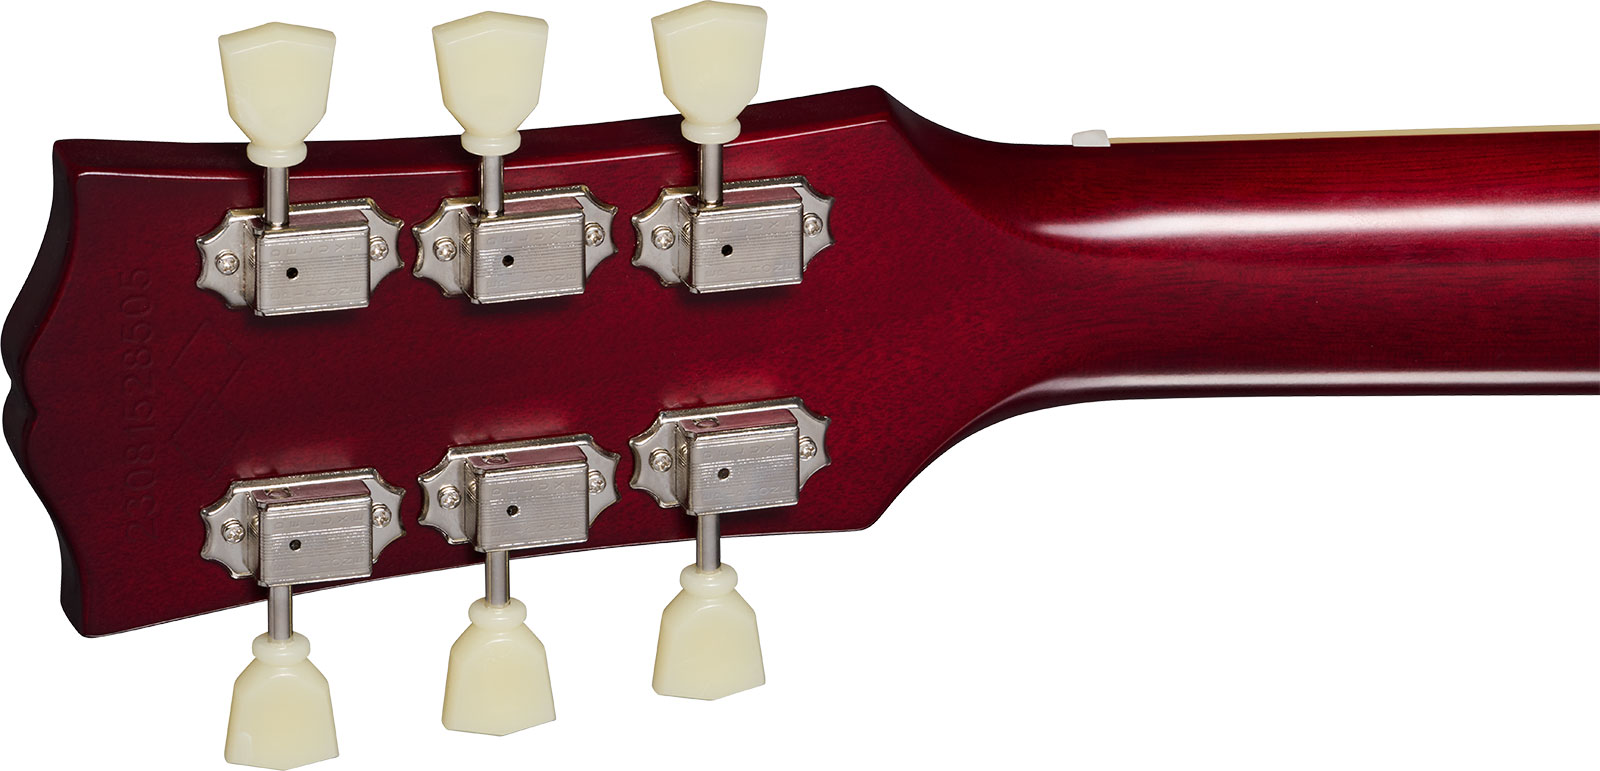 Epiphone 1959 Les Paul Standard Inspired By 2h Gibson Ht Lau - Vos Iced Tea Burst - Enkel gesneden elektrische gitaar - Variation 4